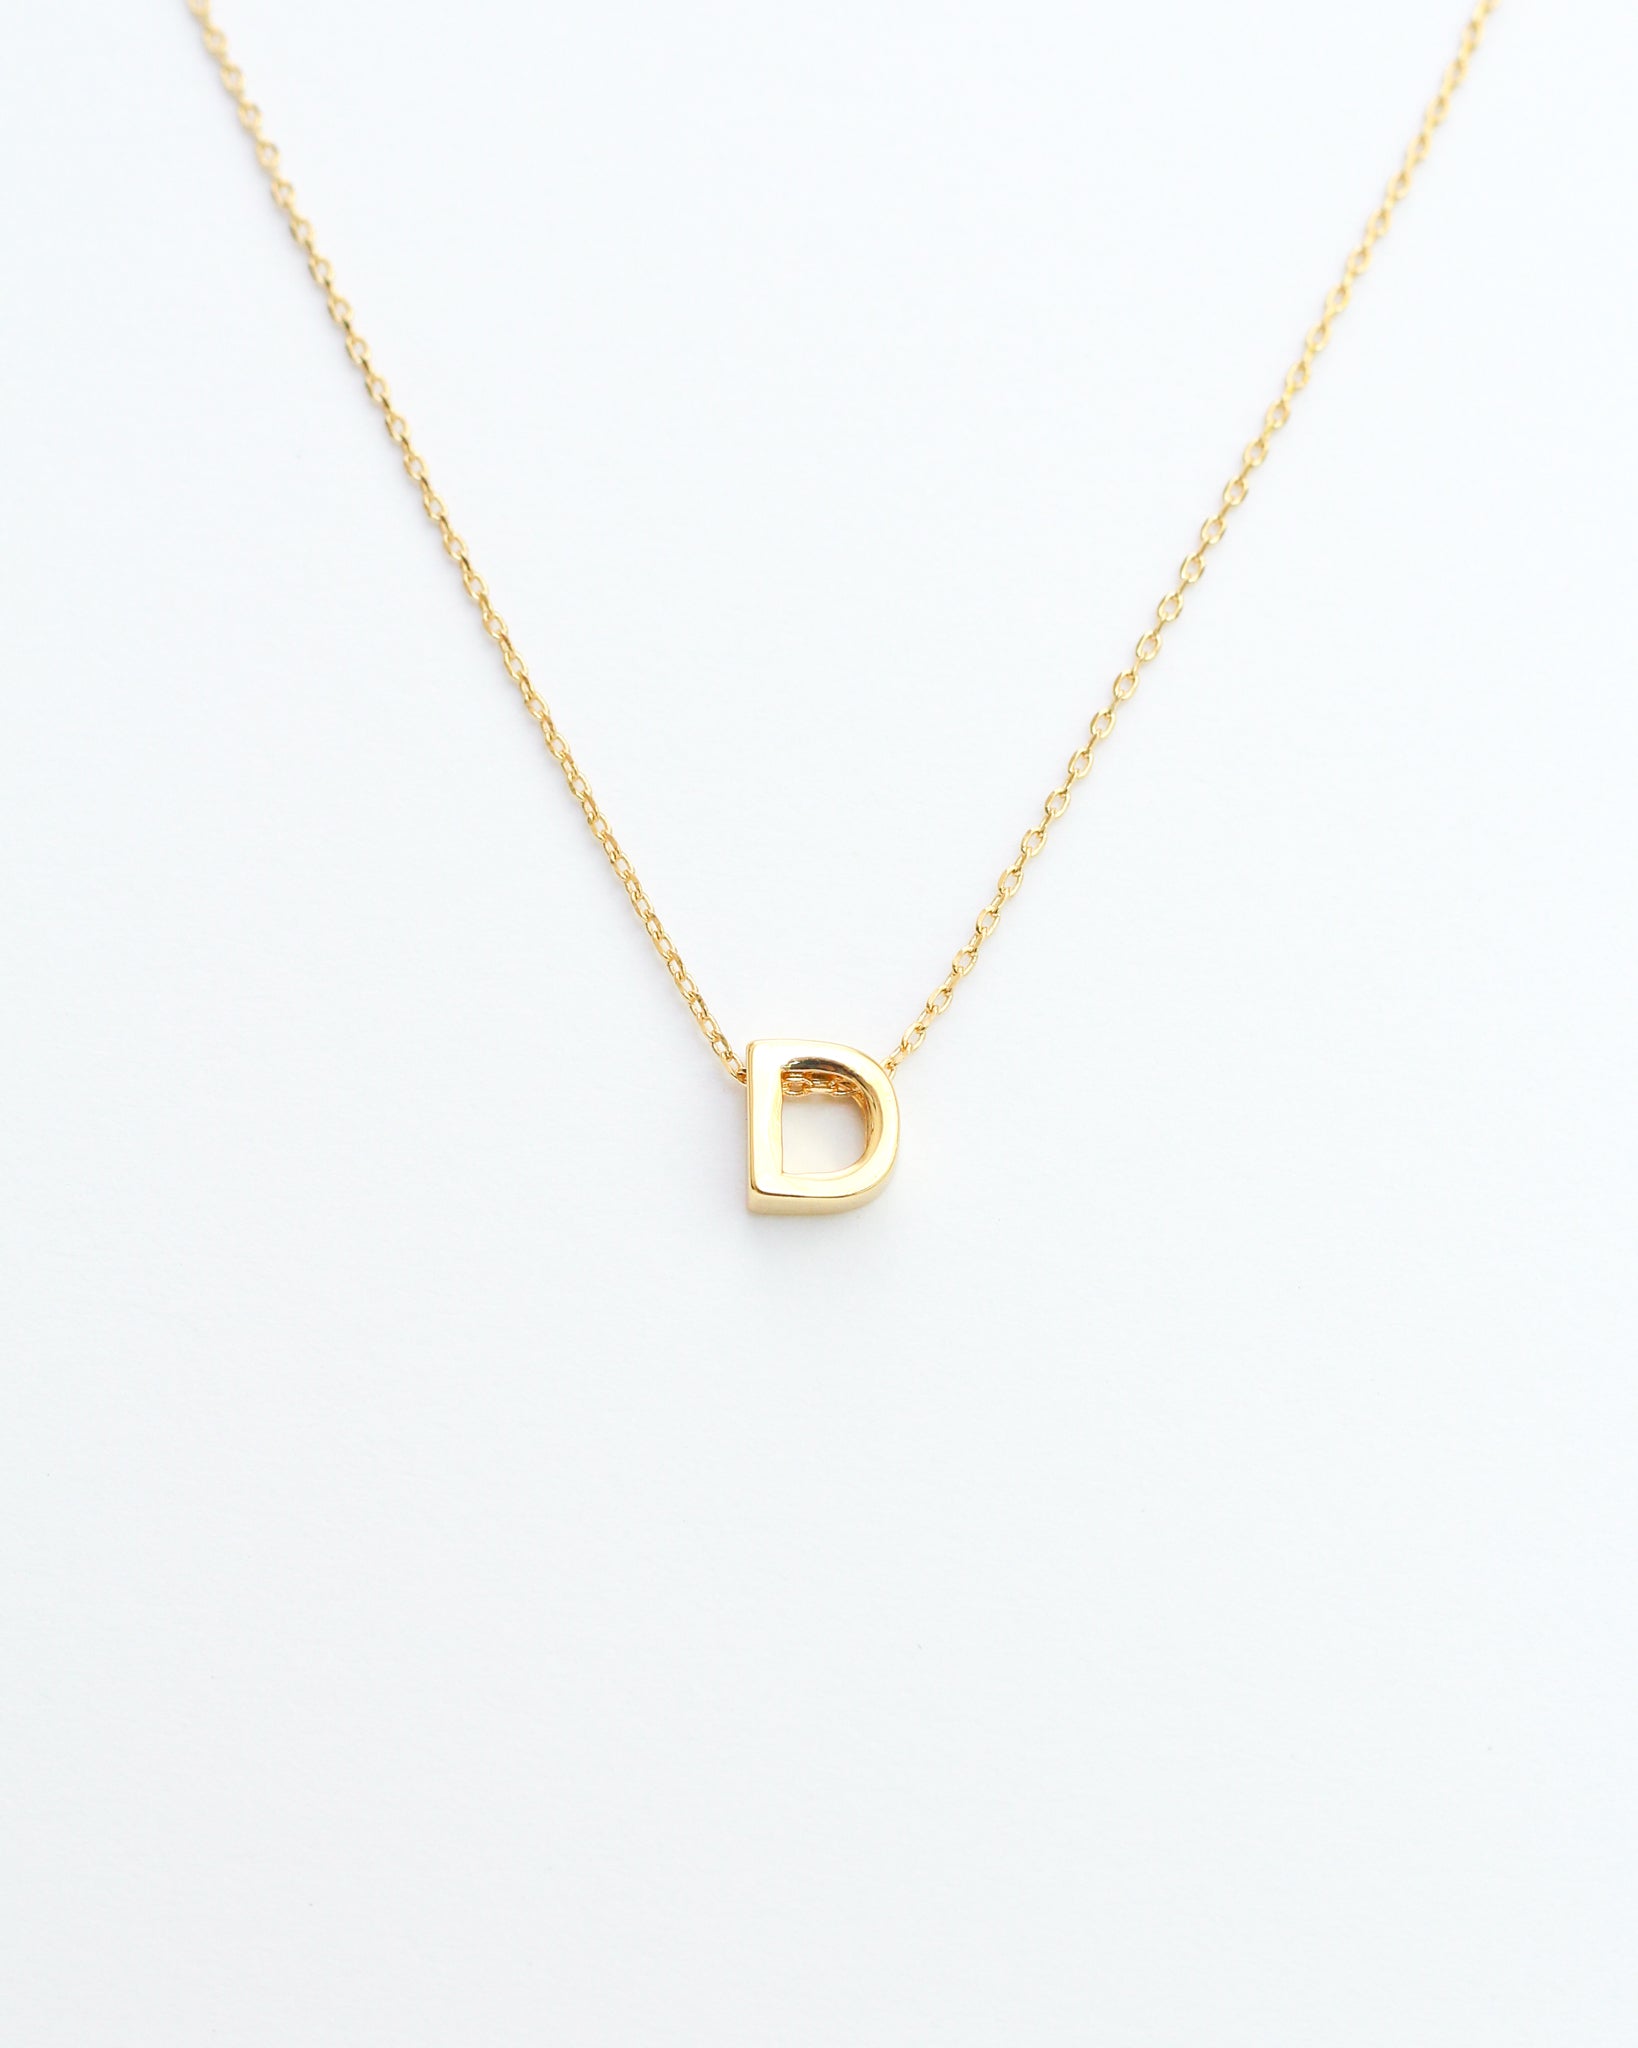 Gold Initial Letter Block Necklace. Letter D necklace